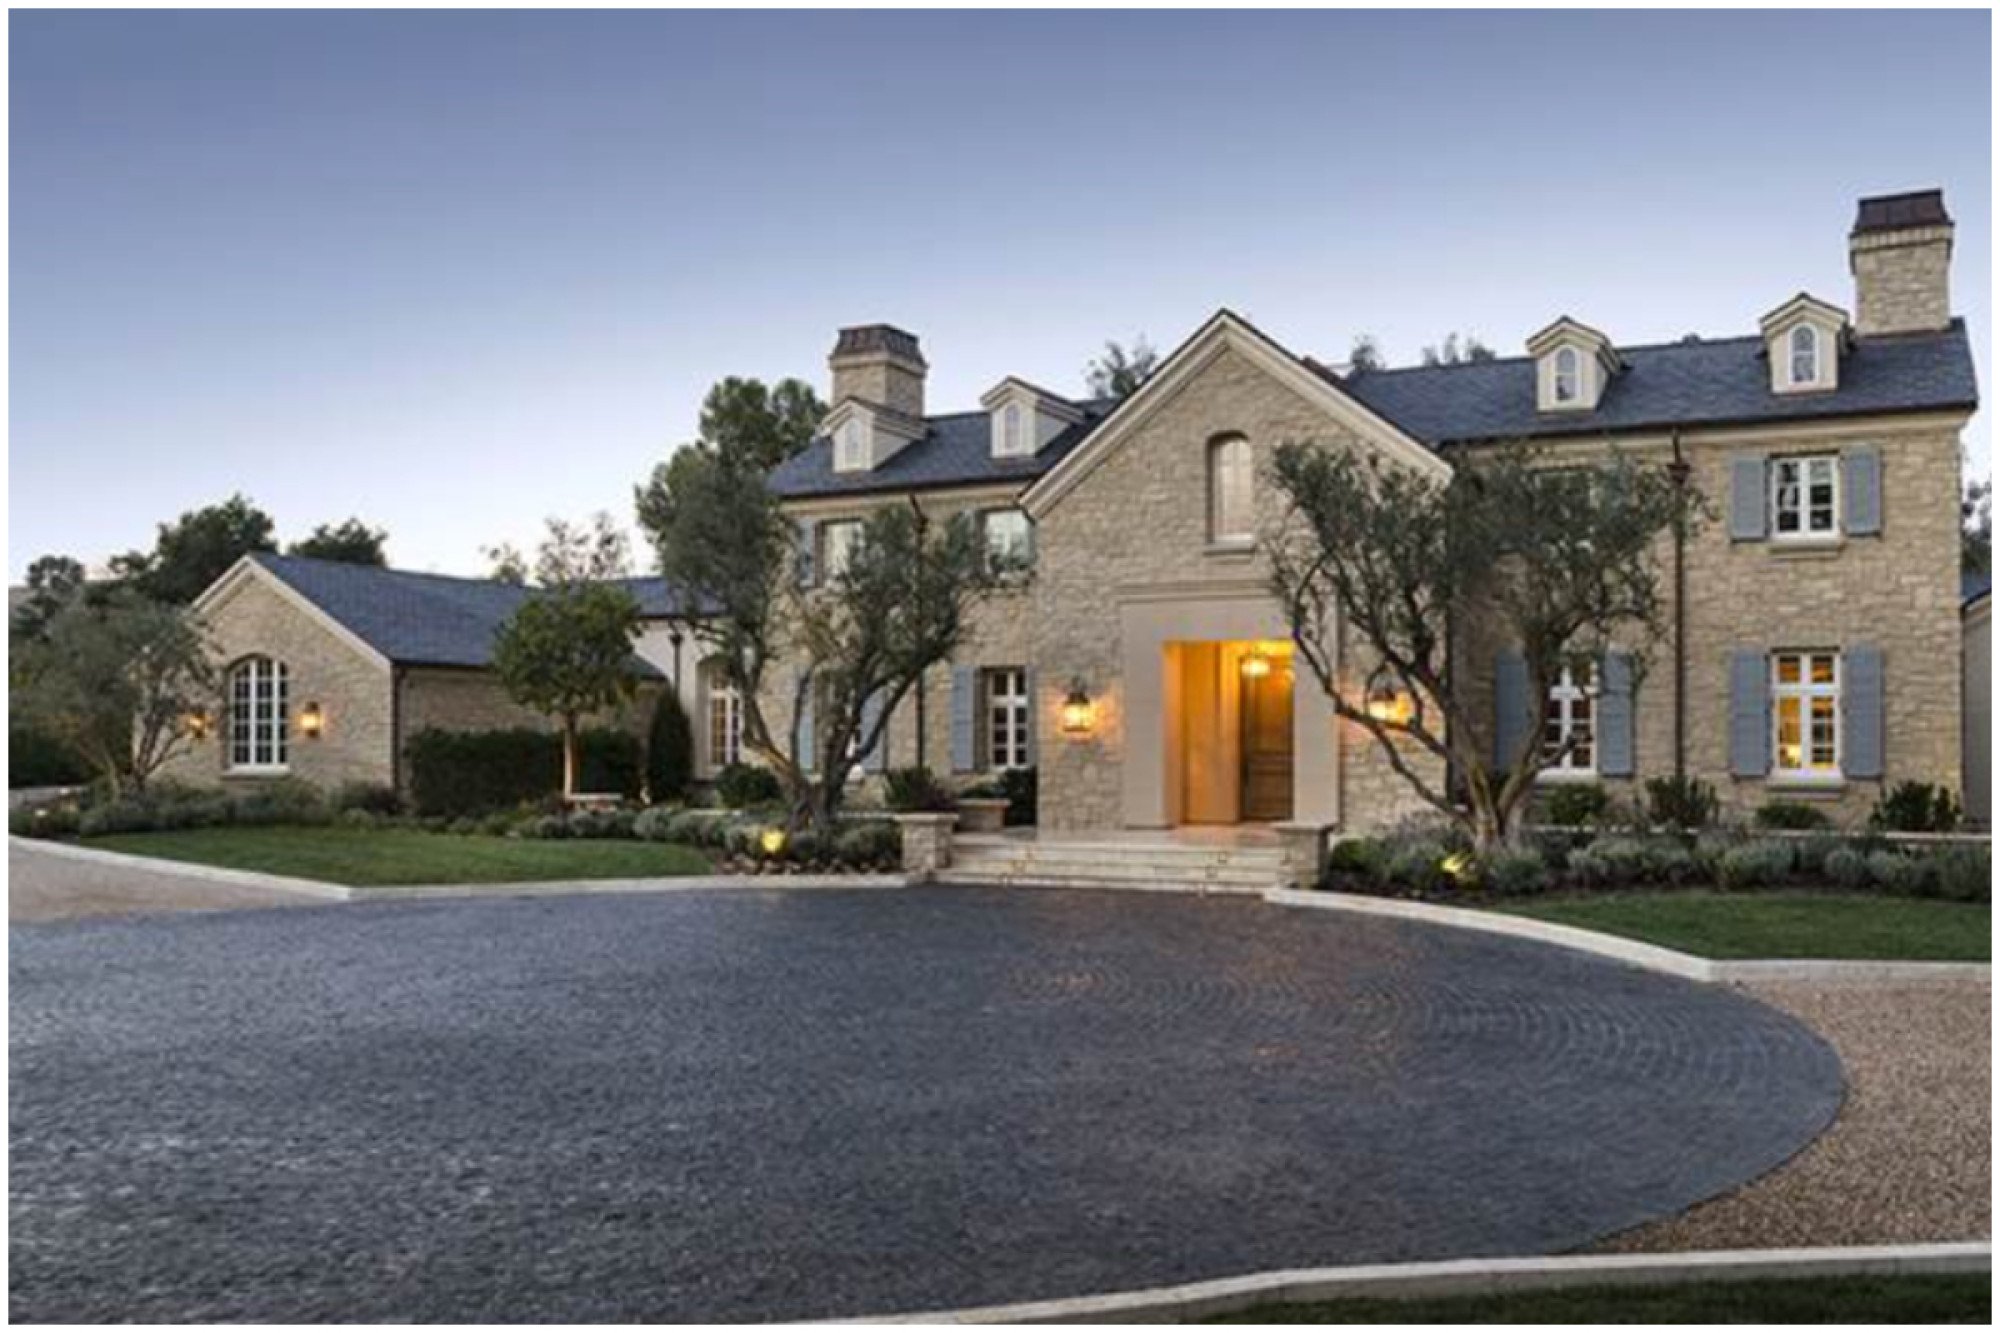 Jeffree Star Lists Hidden Hills Mansion For $20 Million USD